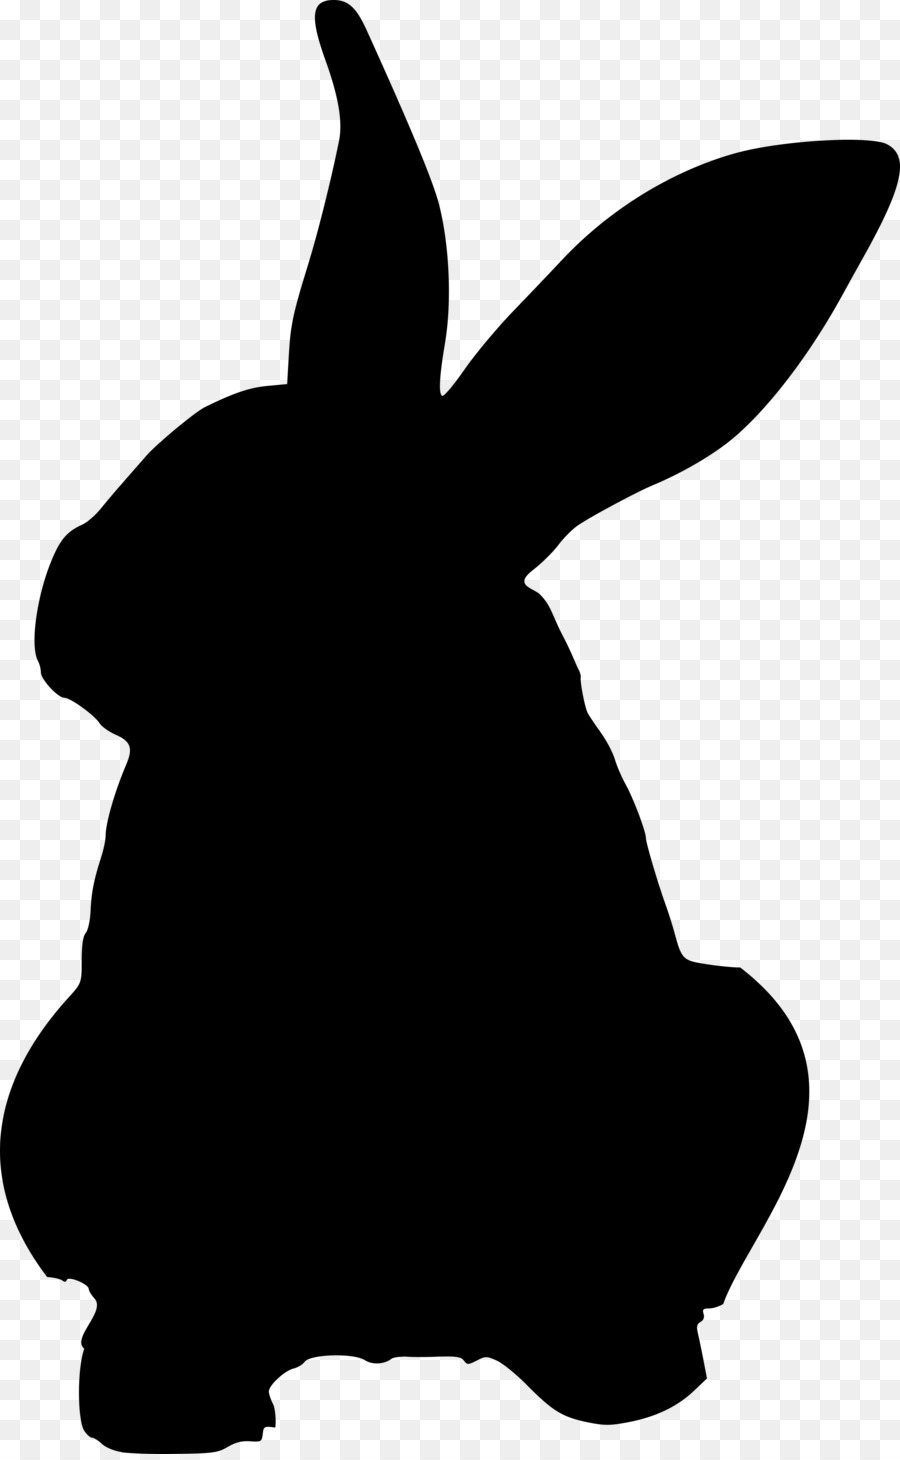 European rabbit Silhouette Clip art - Silhouette png download - 3000*4848 - Free Transparent European Rabbit png Download.